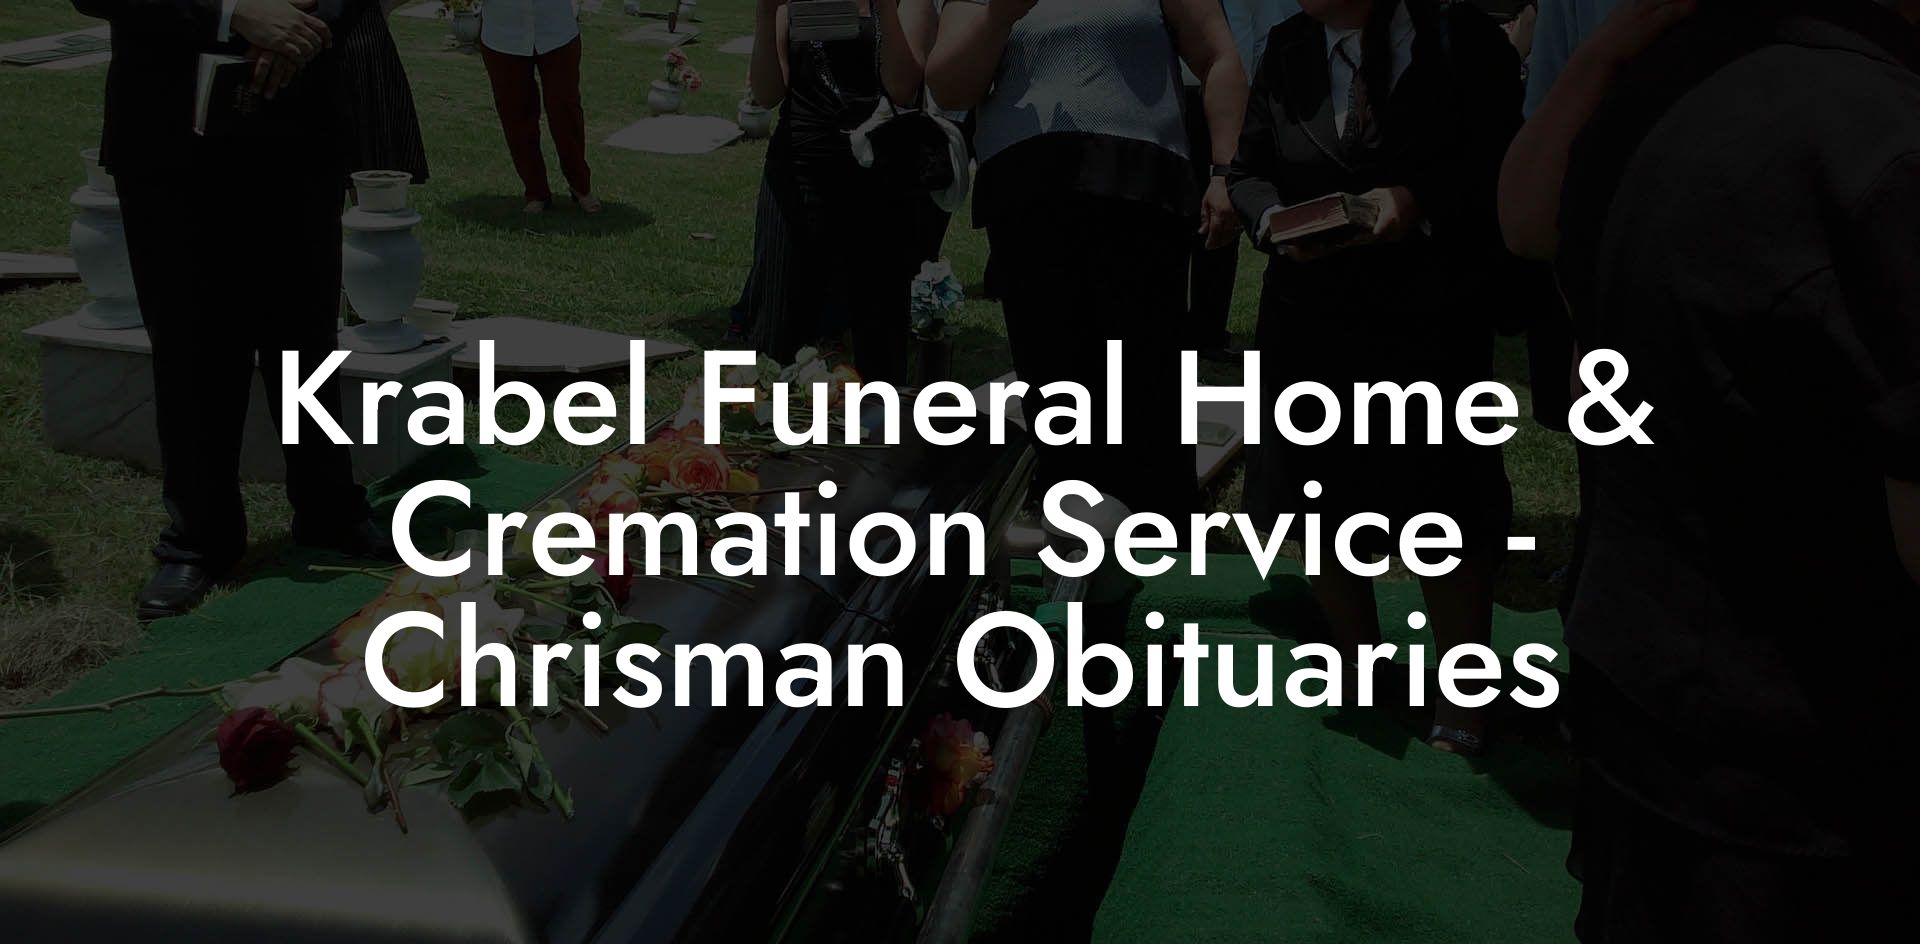 Krabel Funeral Home & Cremation Service - Chrisman Obituaries